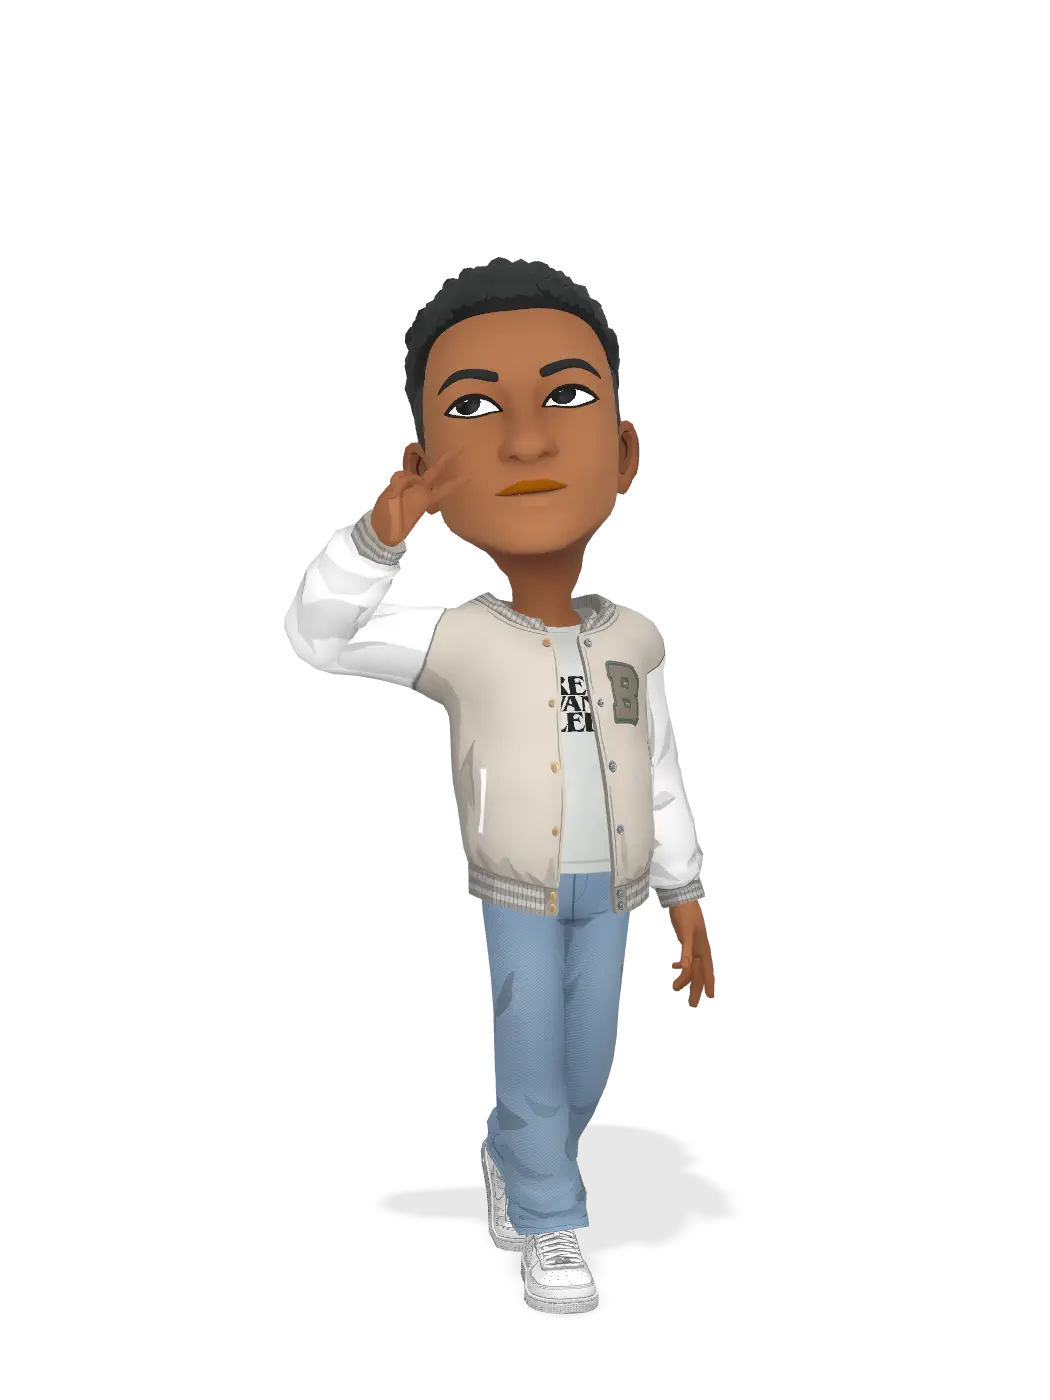 3D Bitmoji for chvfung avatar